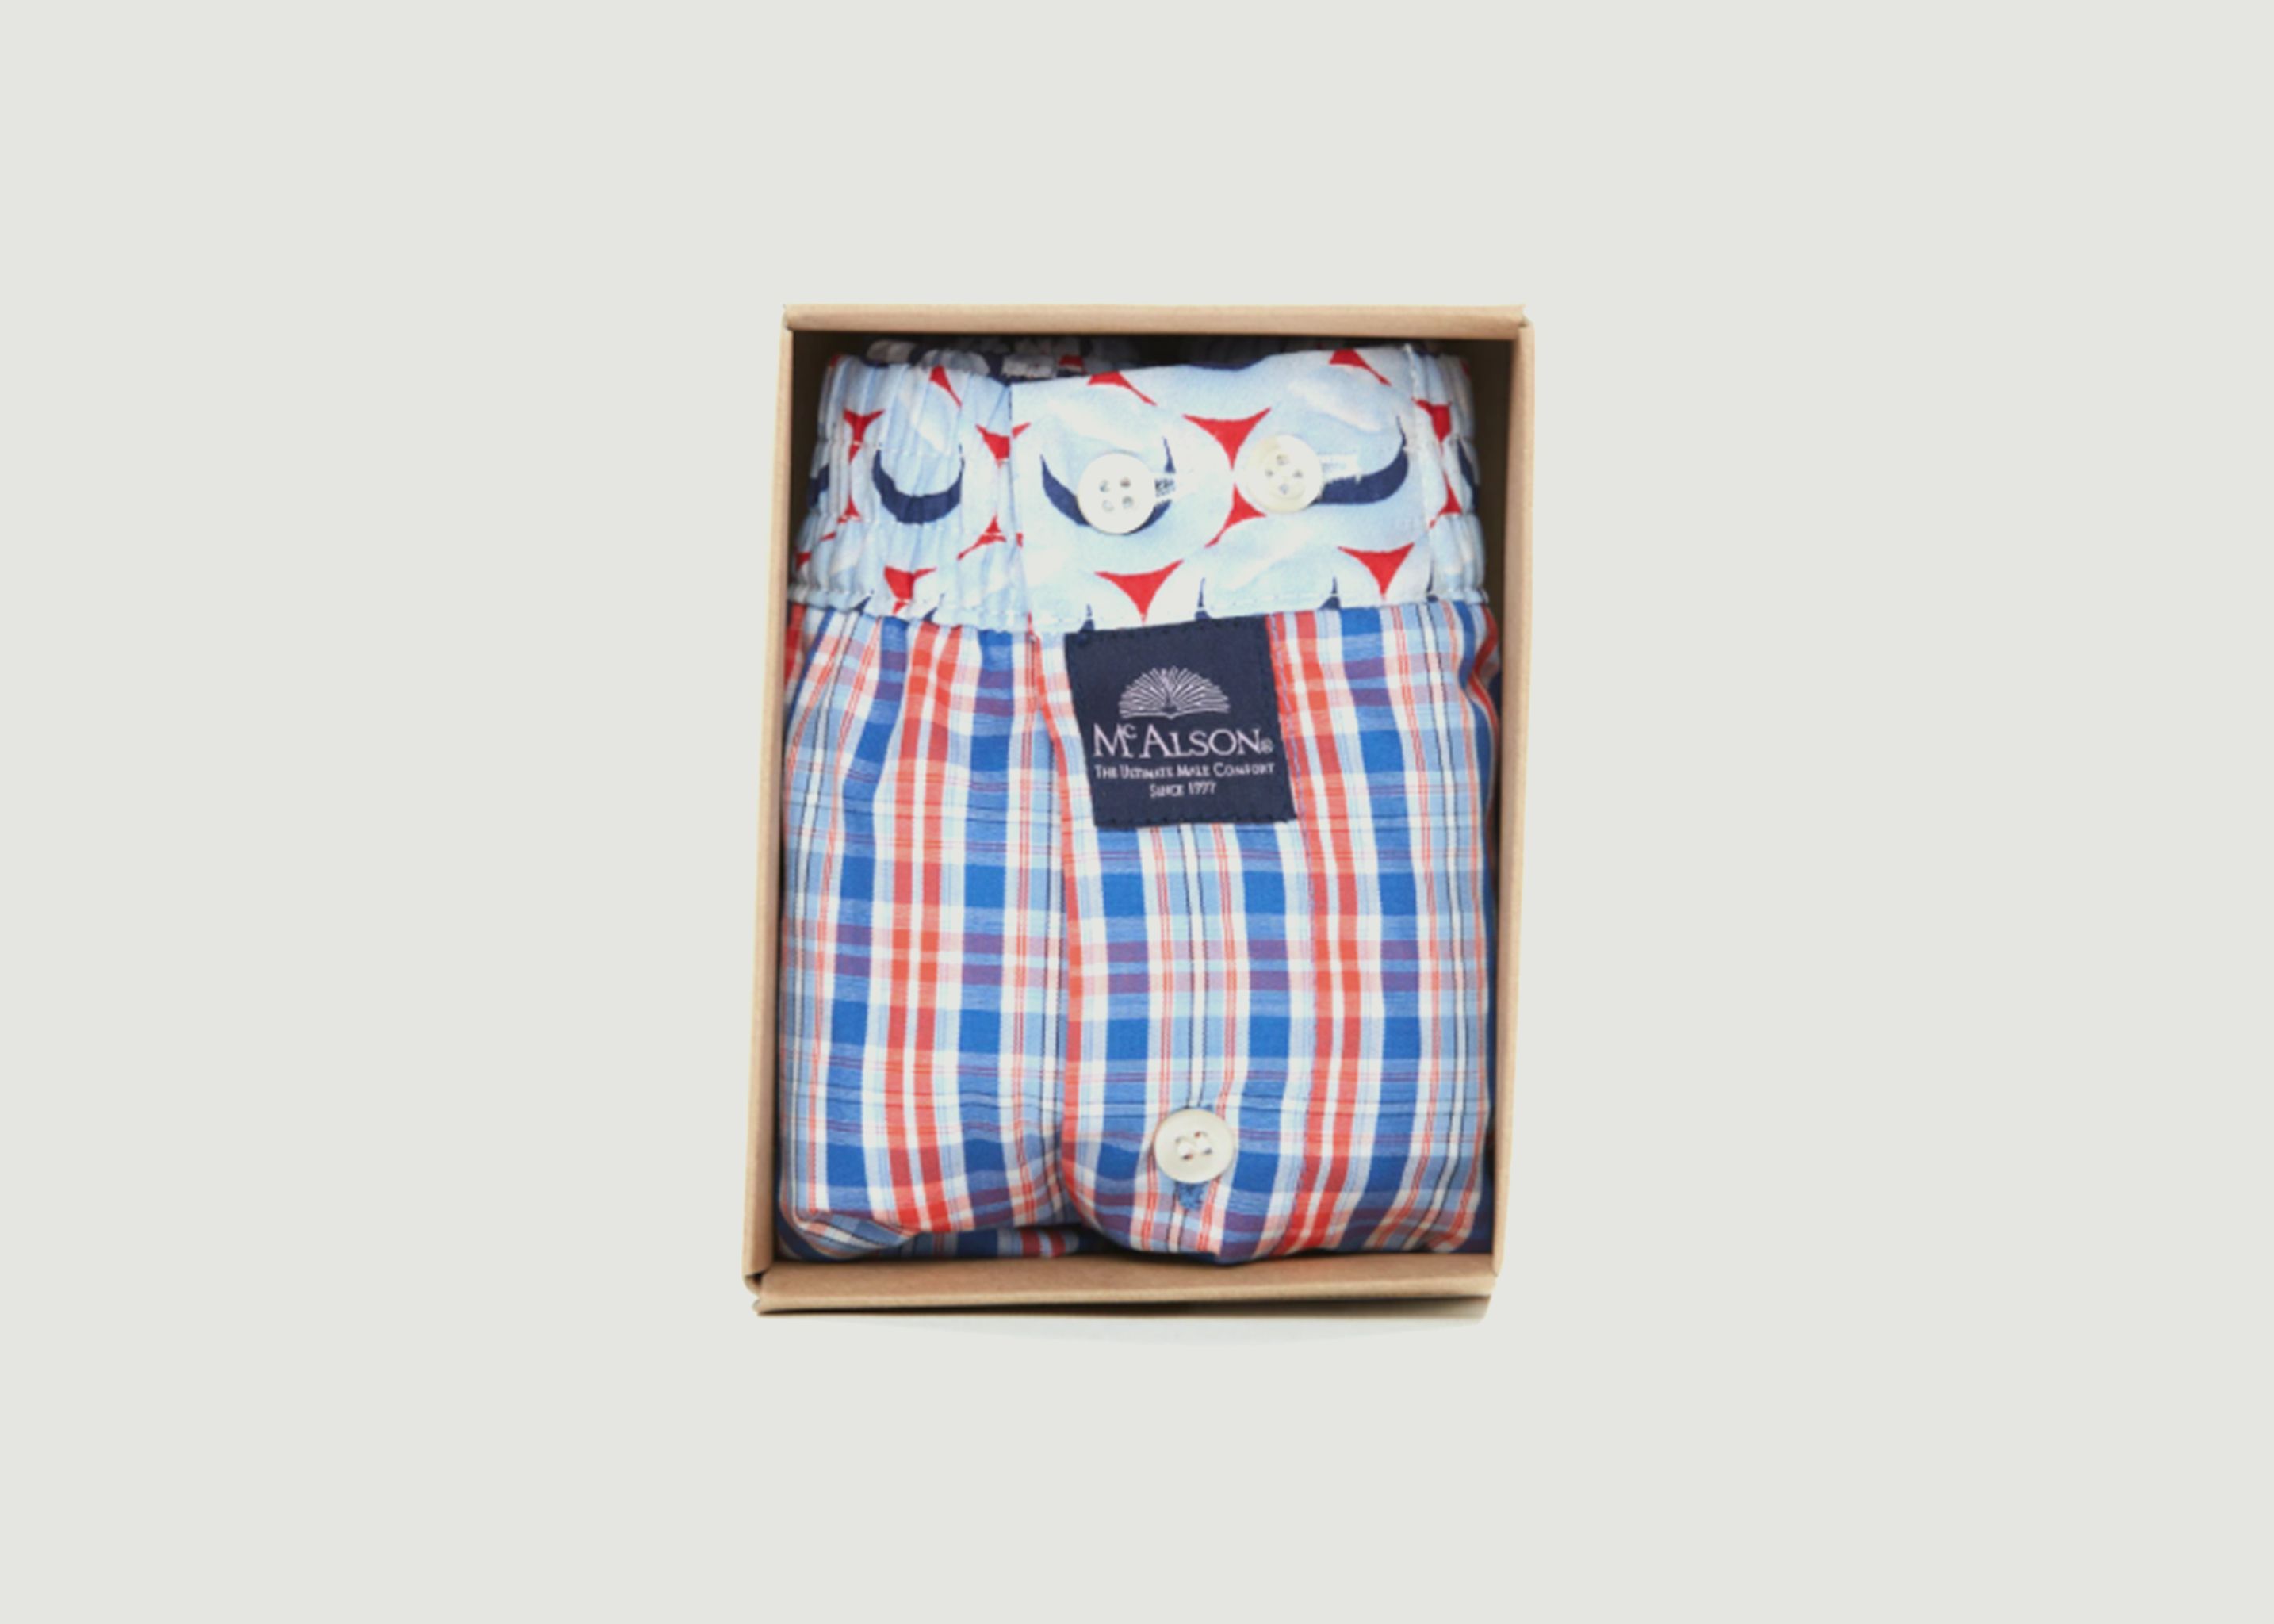 Grid pattern boxer shorts - Mc Alson